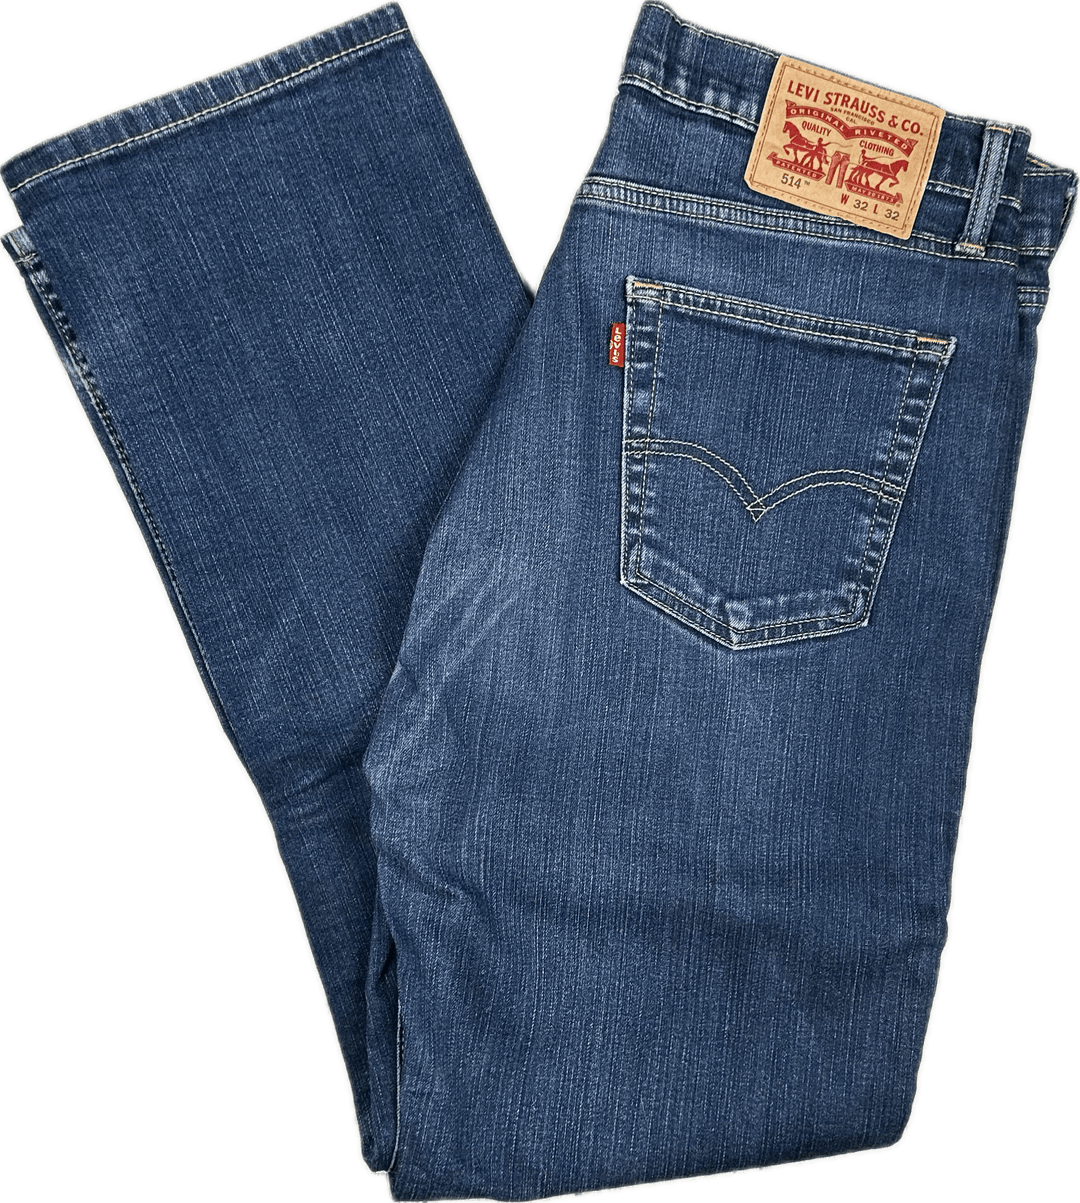 Levis 514 Mens Straight Leg Jeans - Size 32/32 - Jean Pool